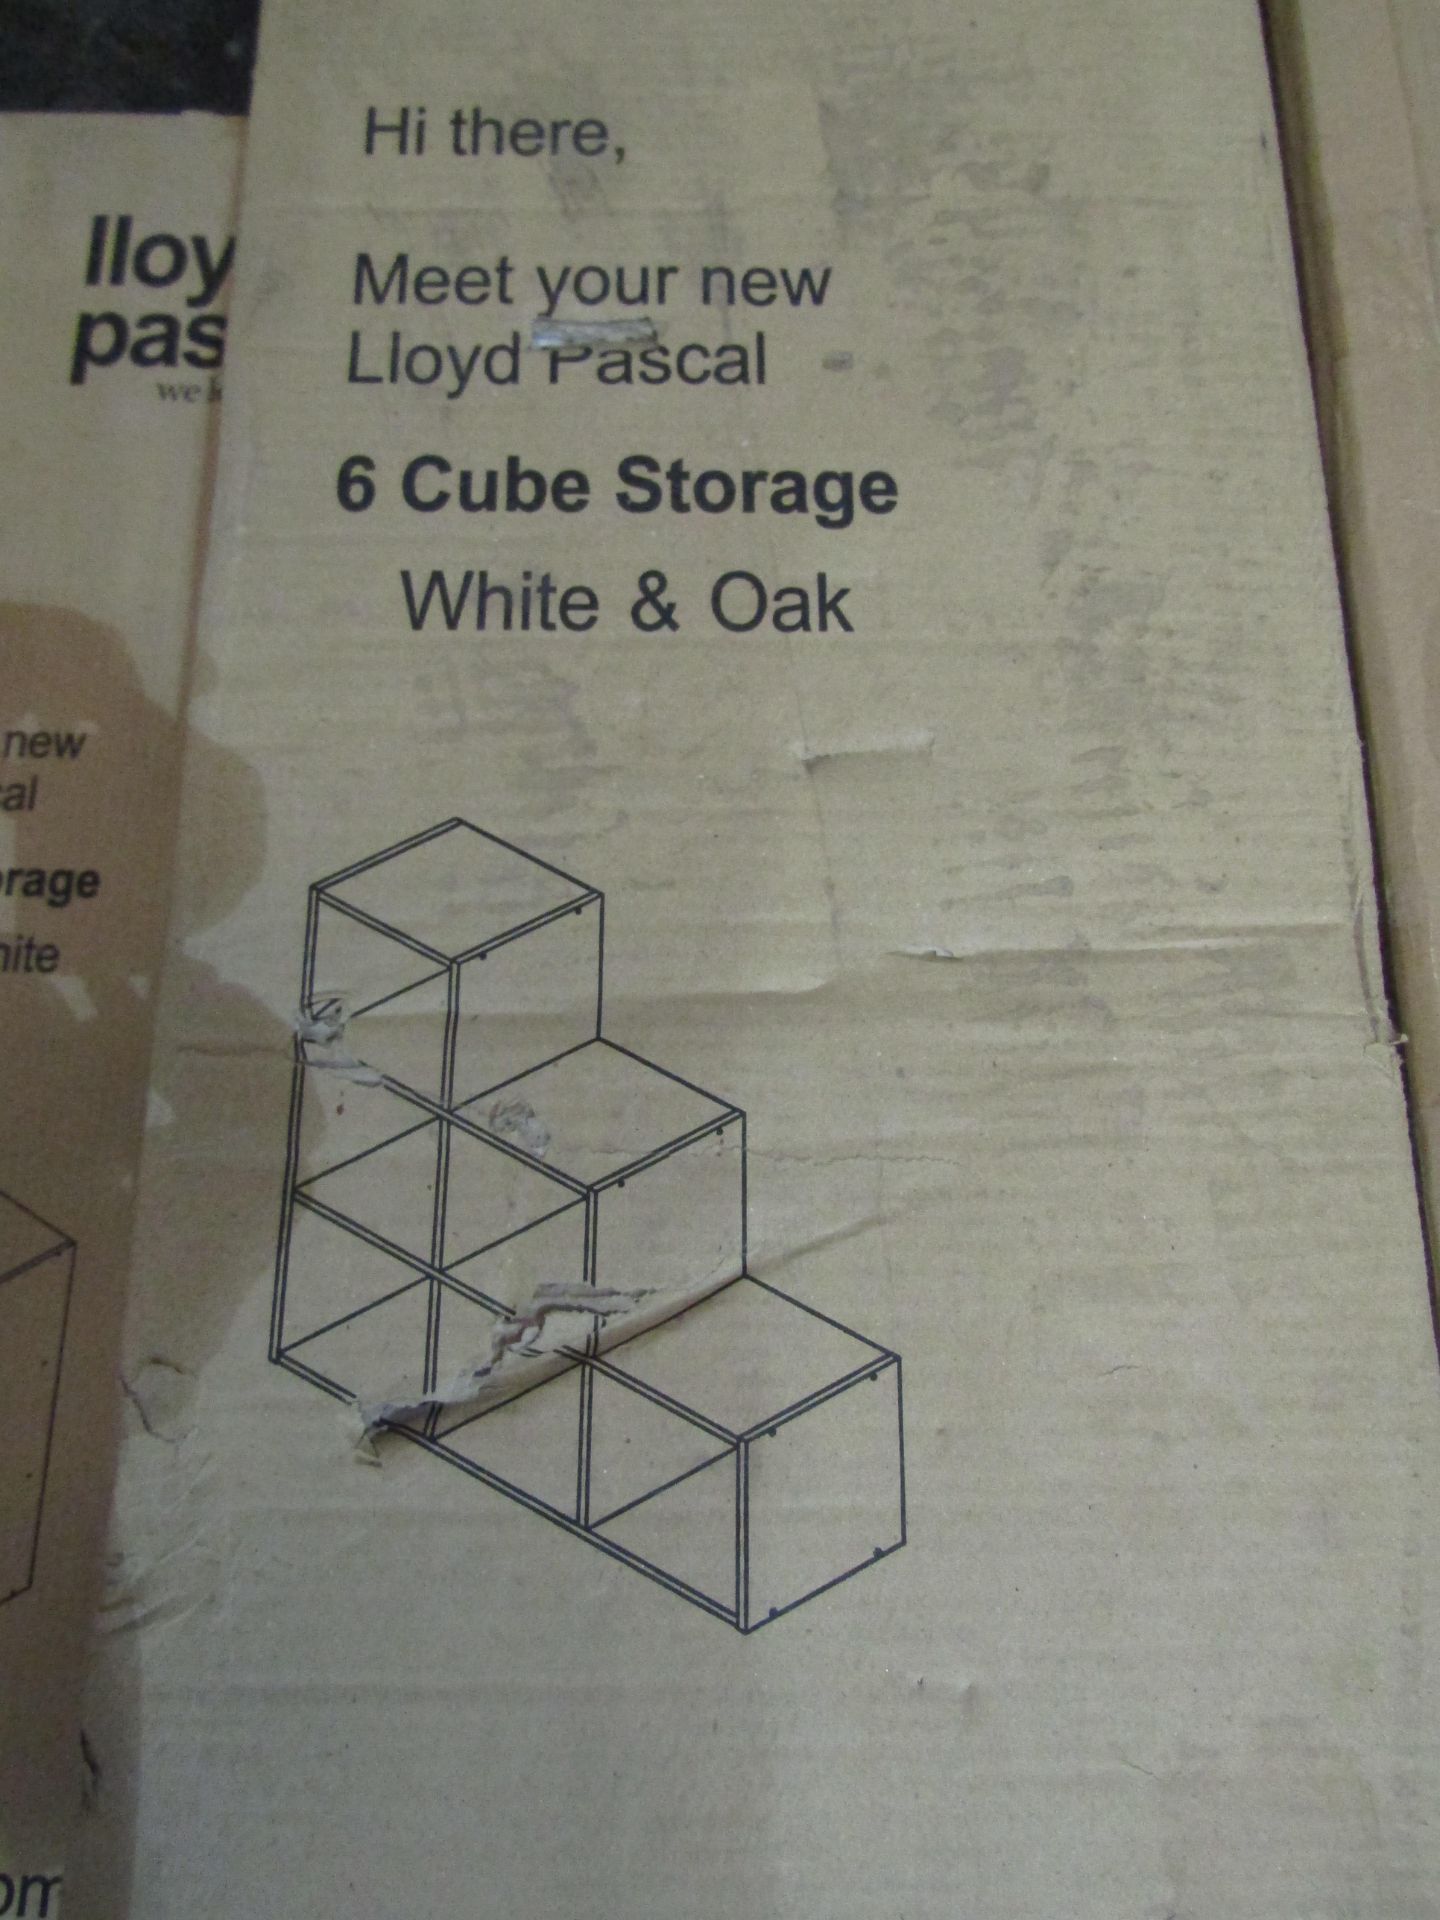 Lloyd Pascal 6 Cube Storage, White & Oak. RRP œ79 - Image 2 of 2